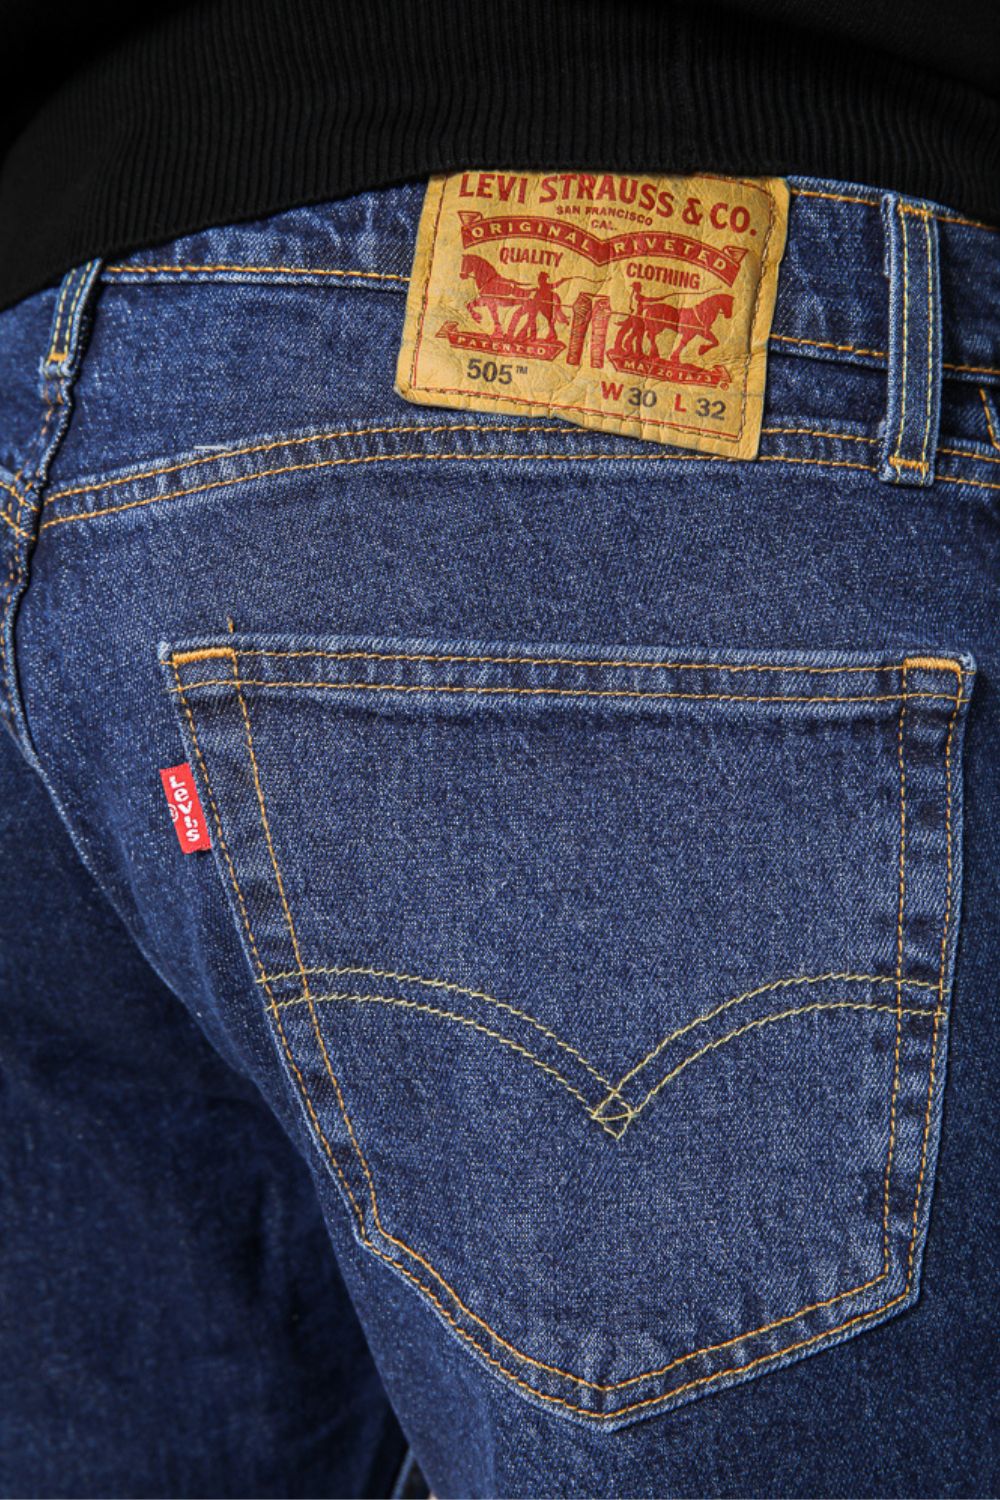 DEEP-POCKET ג'ינס לגברים 505